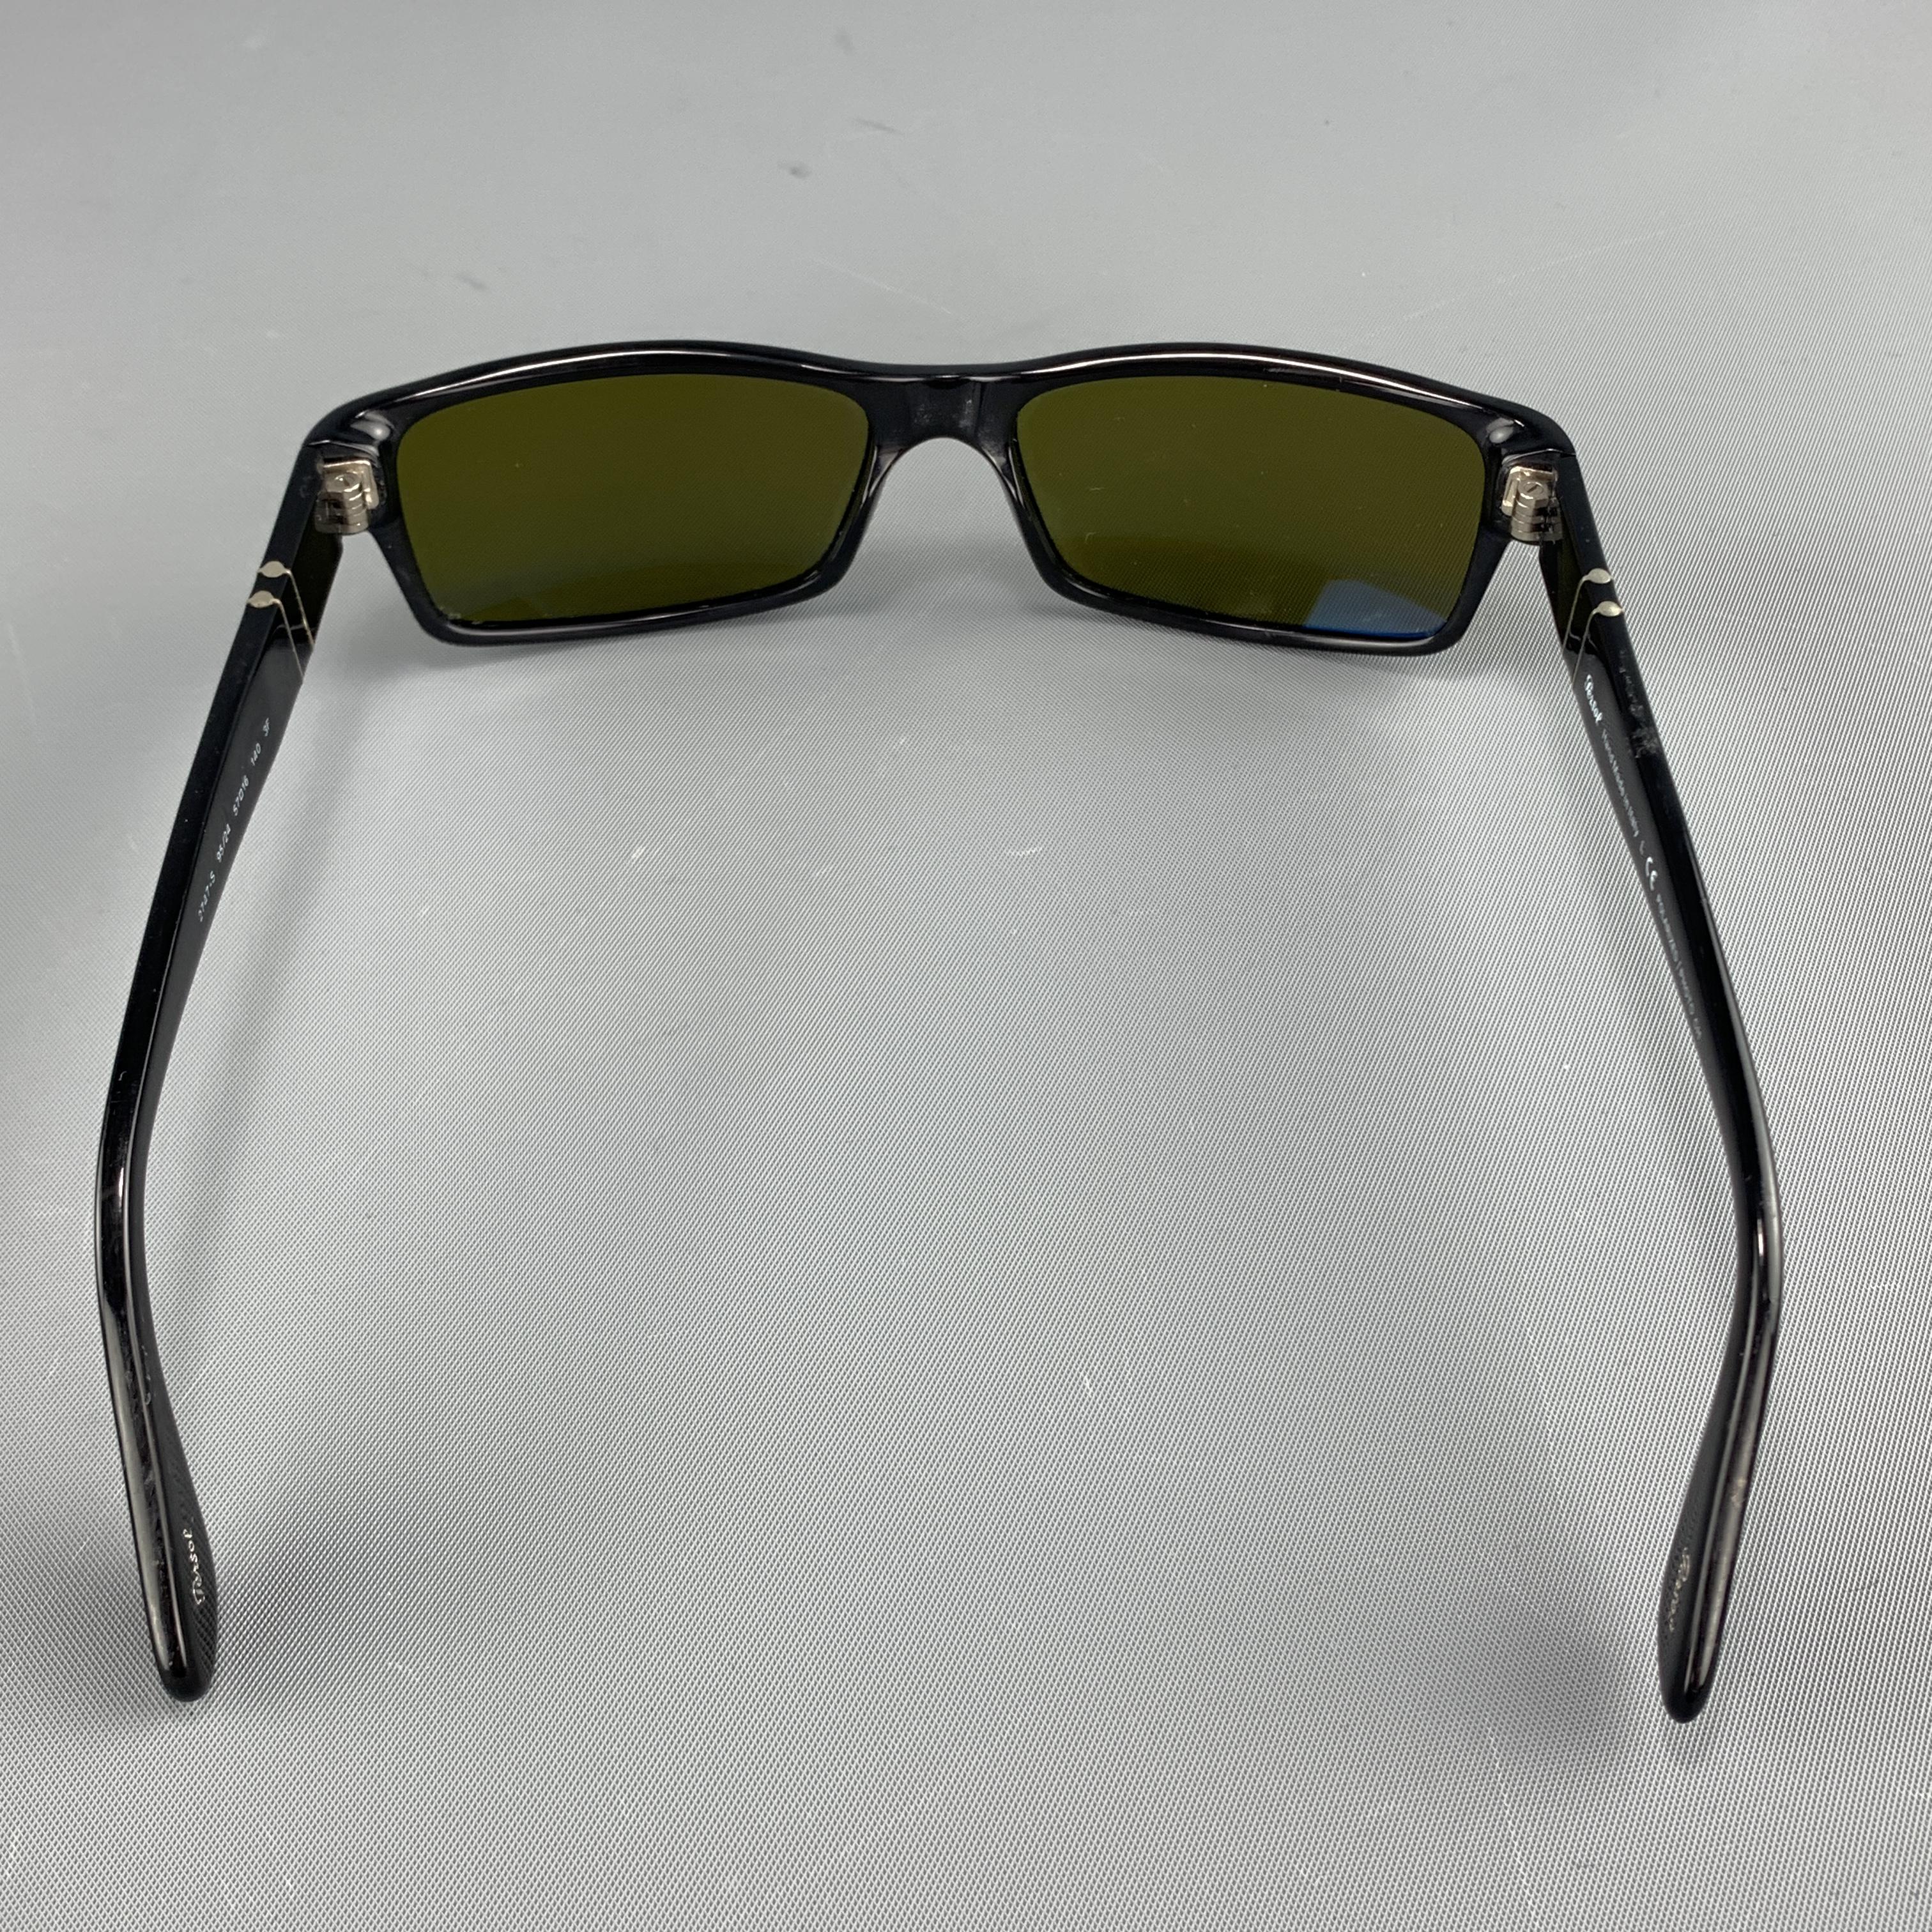 PERSOL Black Acetate Green Lens Recatngle Sunglasses 1